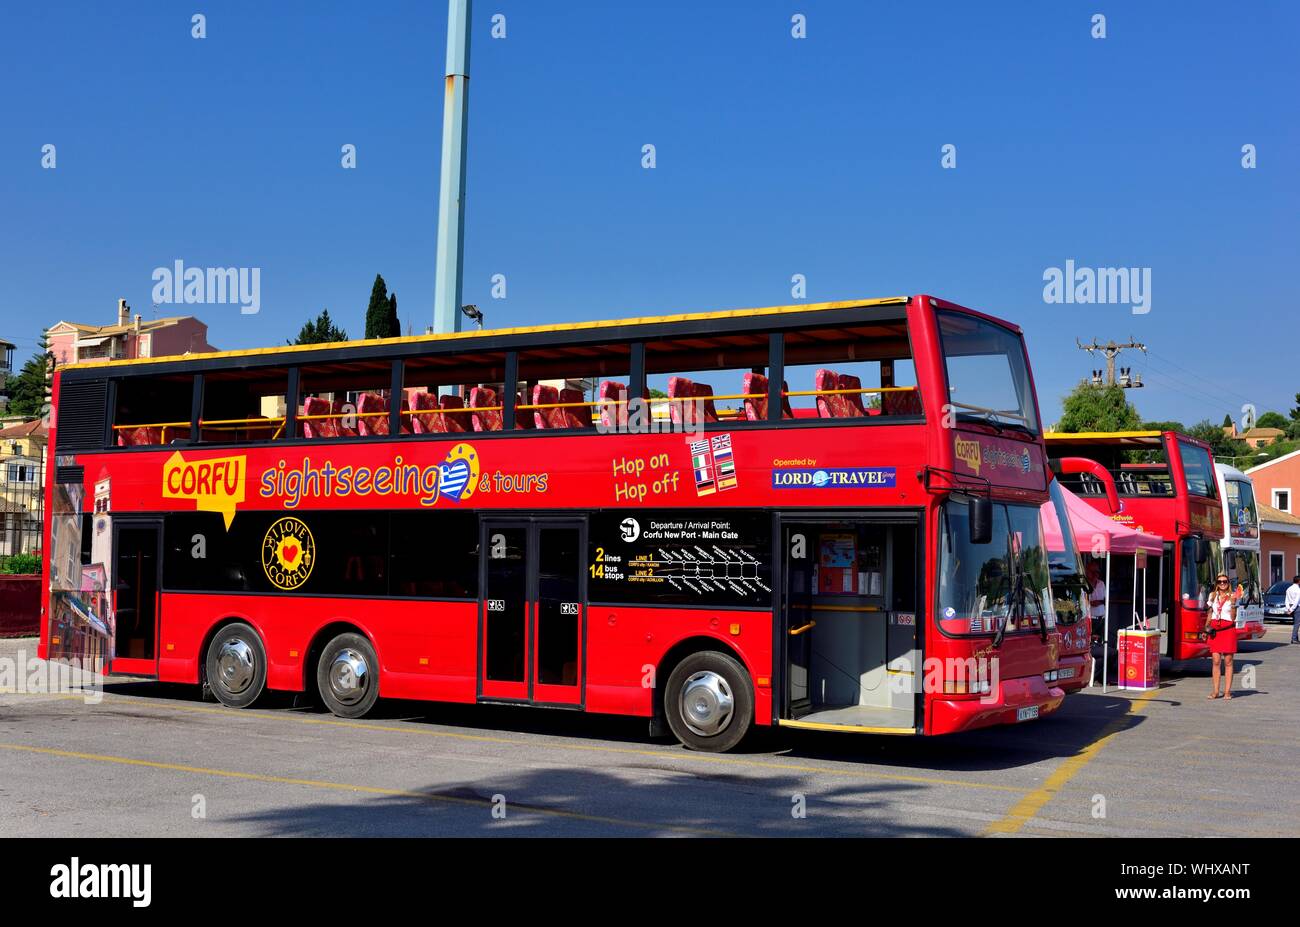 Corfù City Tours,open top bus,visite guidate,,Corfu Corfu,Kerkira,Grecia,Isole Ionie Foto Stock